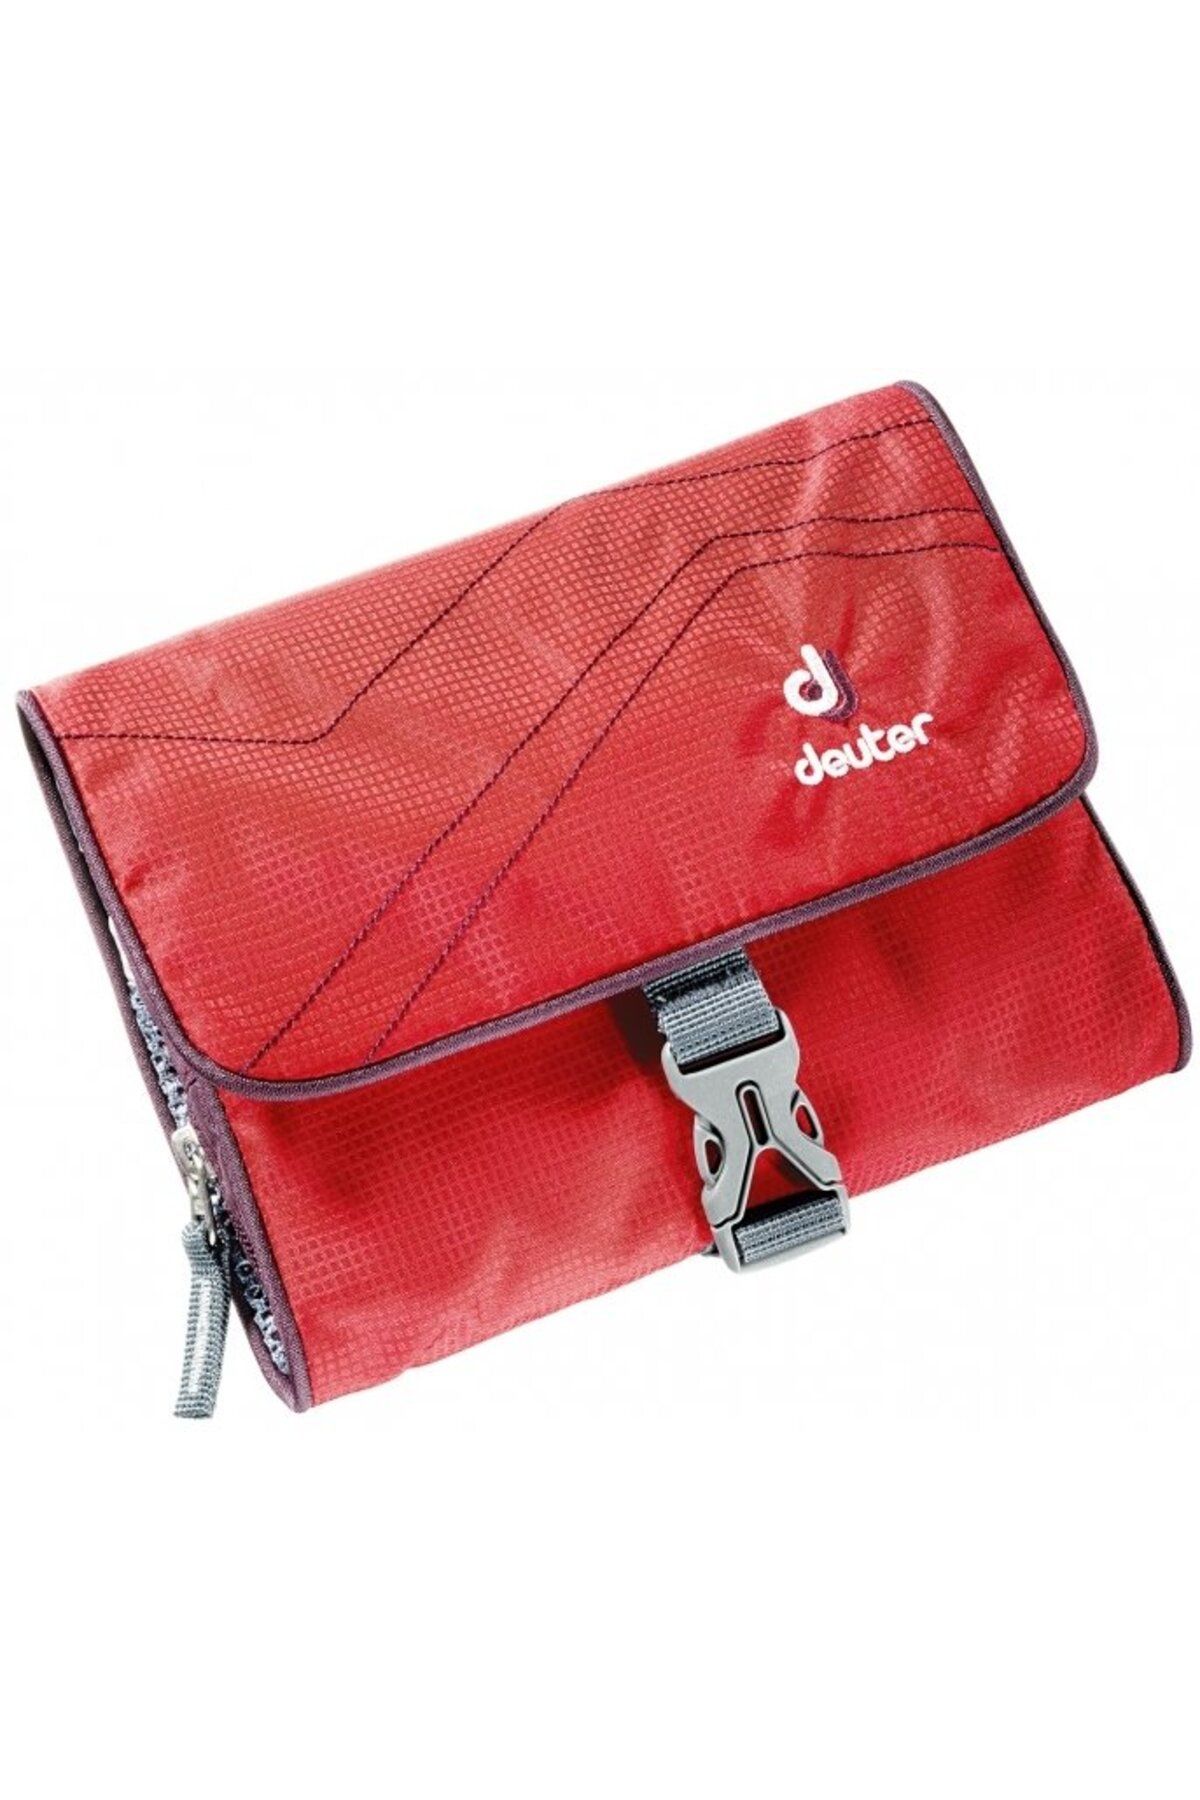 Deuter Wash Bag I Aksesuar Çantası Kırmızı - Mor 2485764